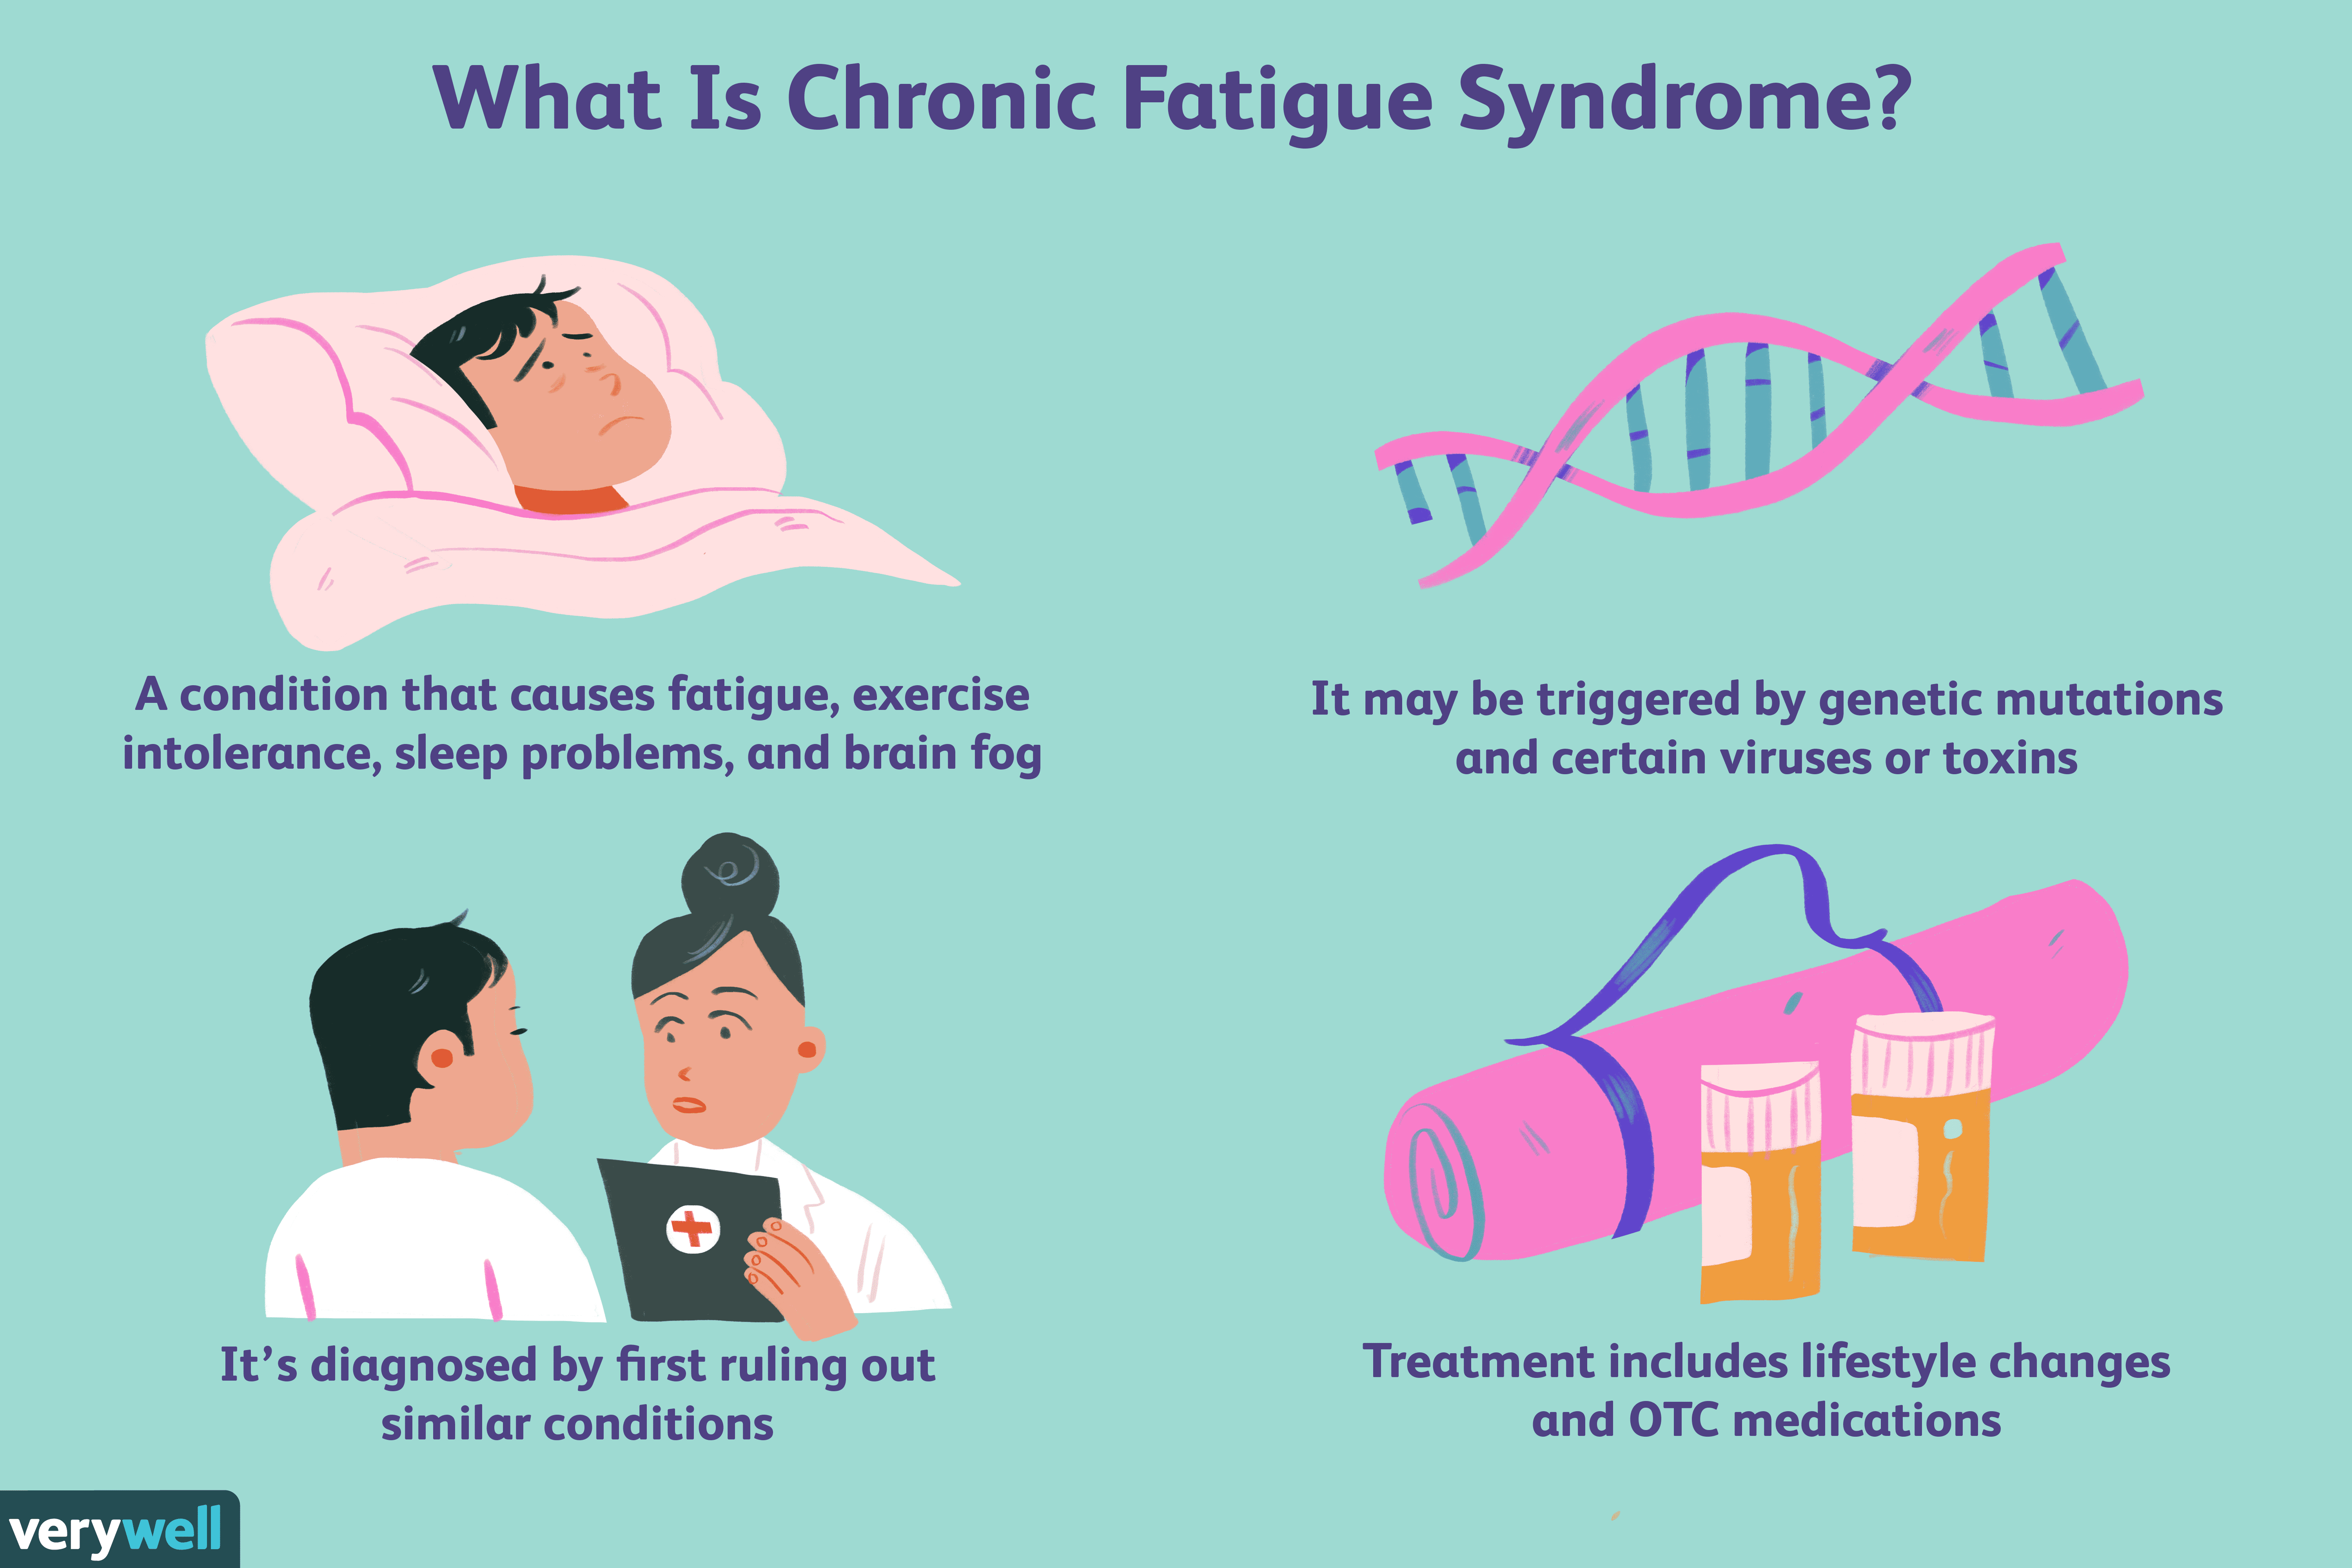 Do You Have Chronic Fatigue Syndrome?